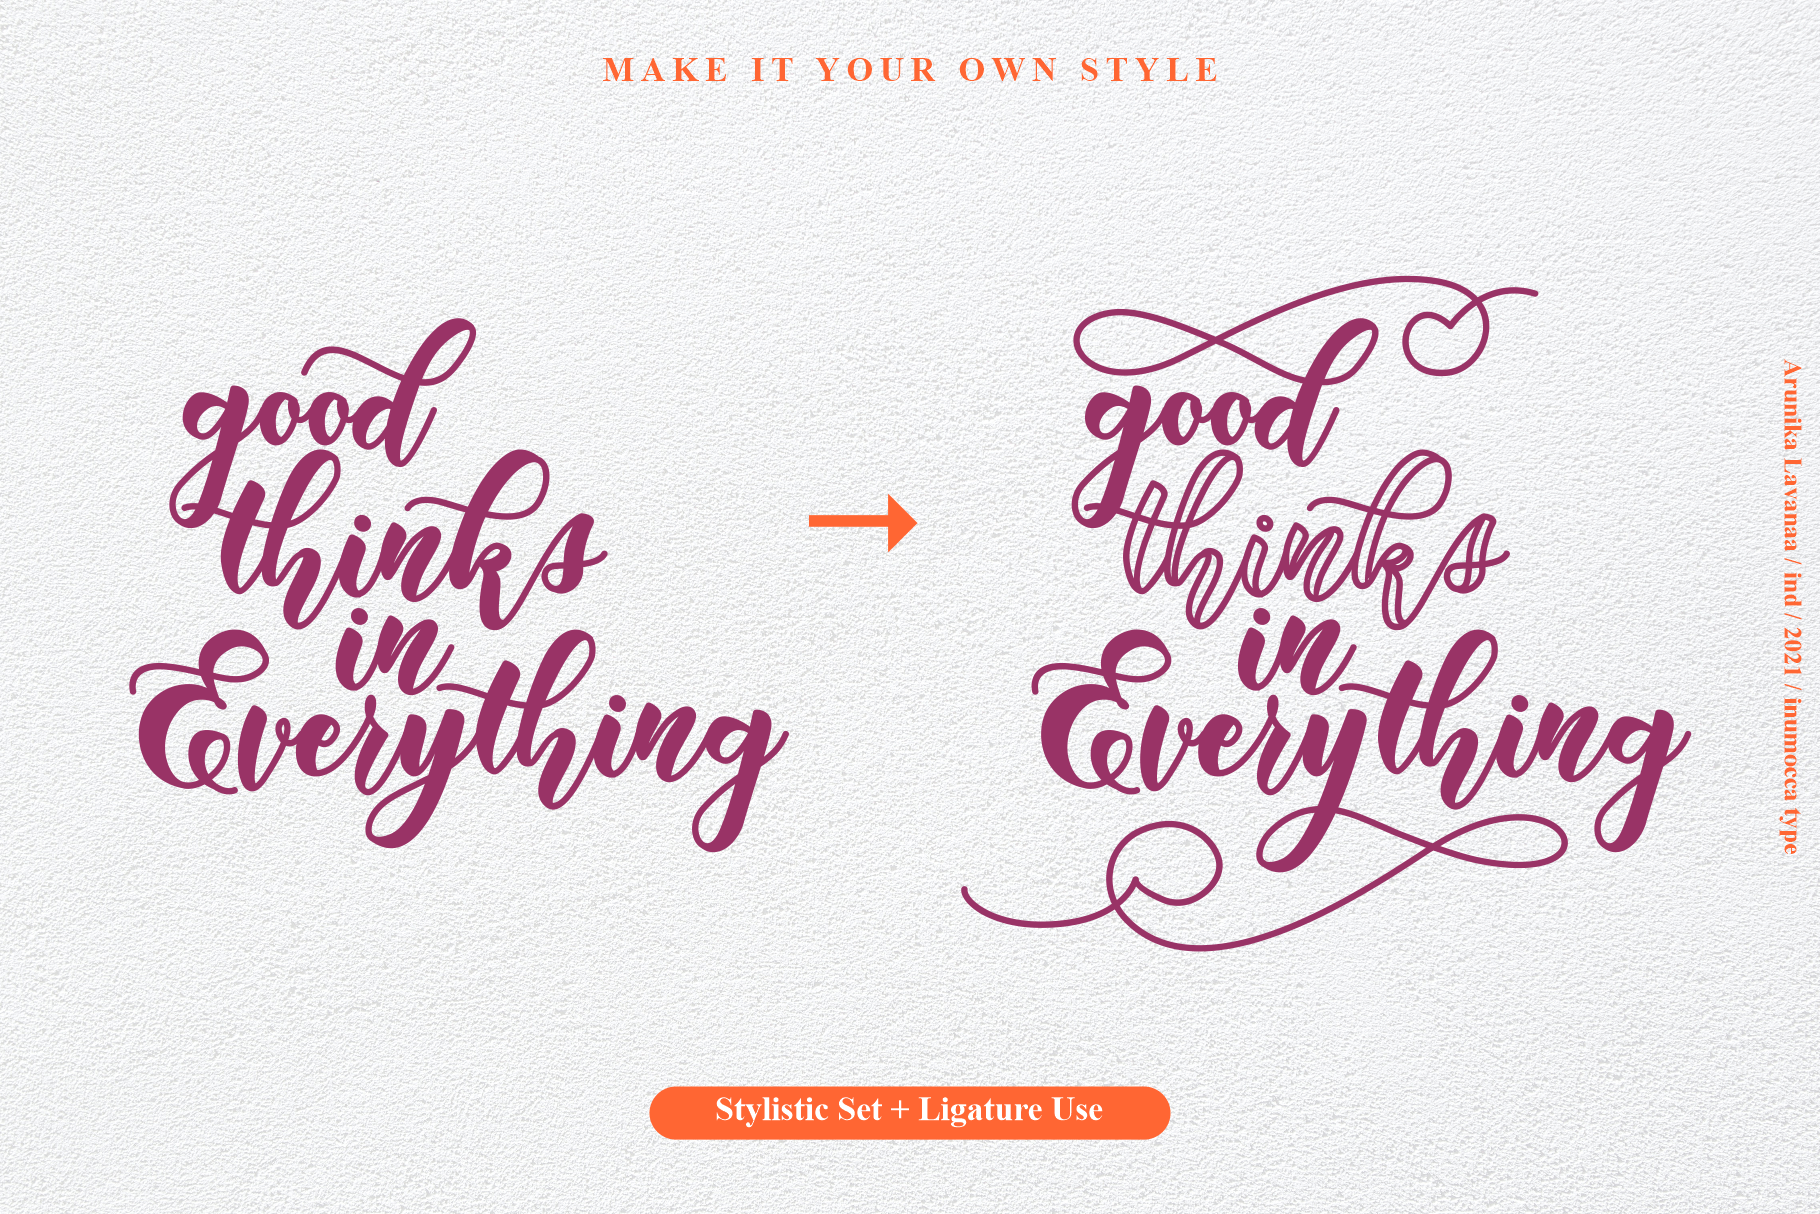 arunika lavanaa modern and stylish handwritten font styles comparison.